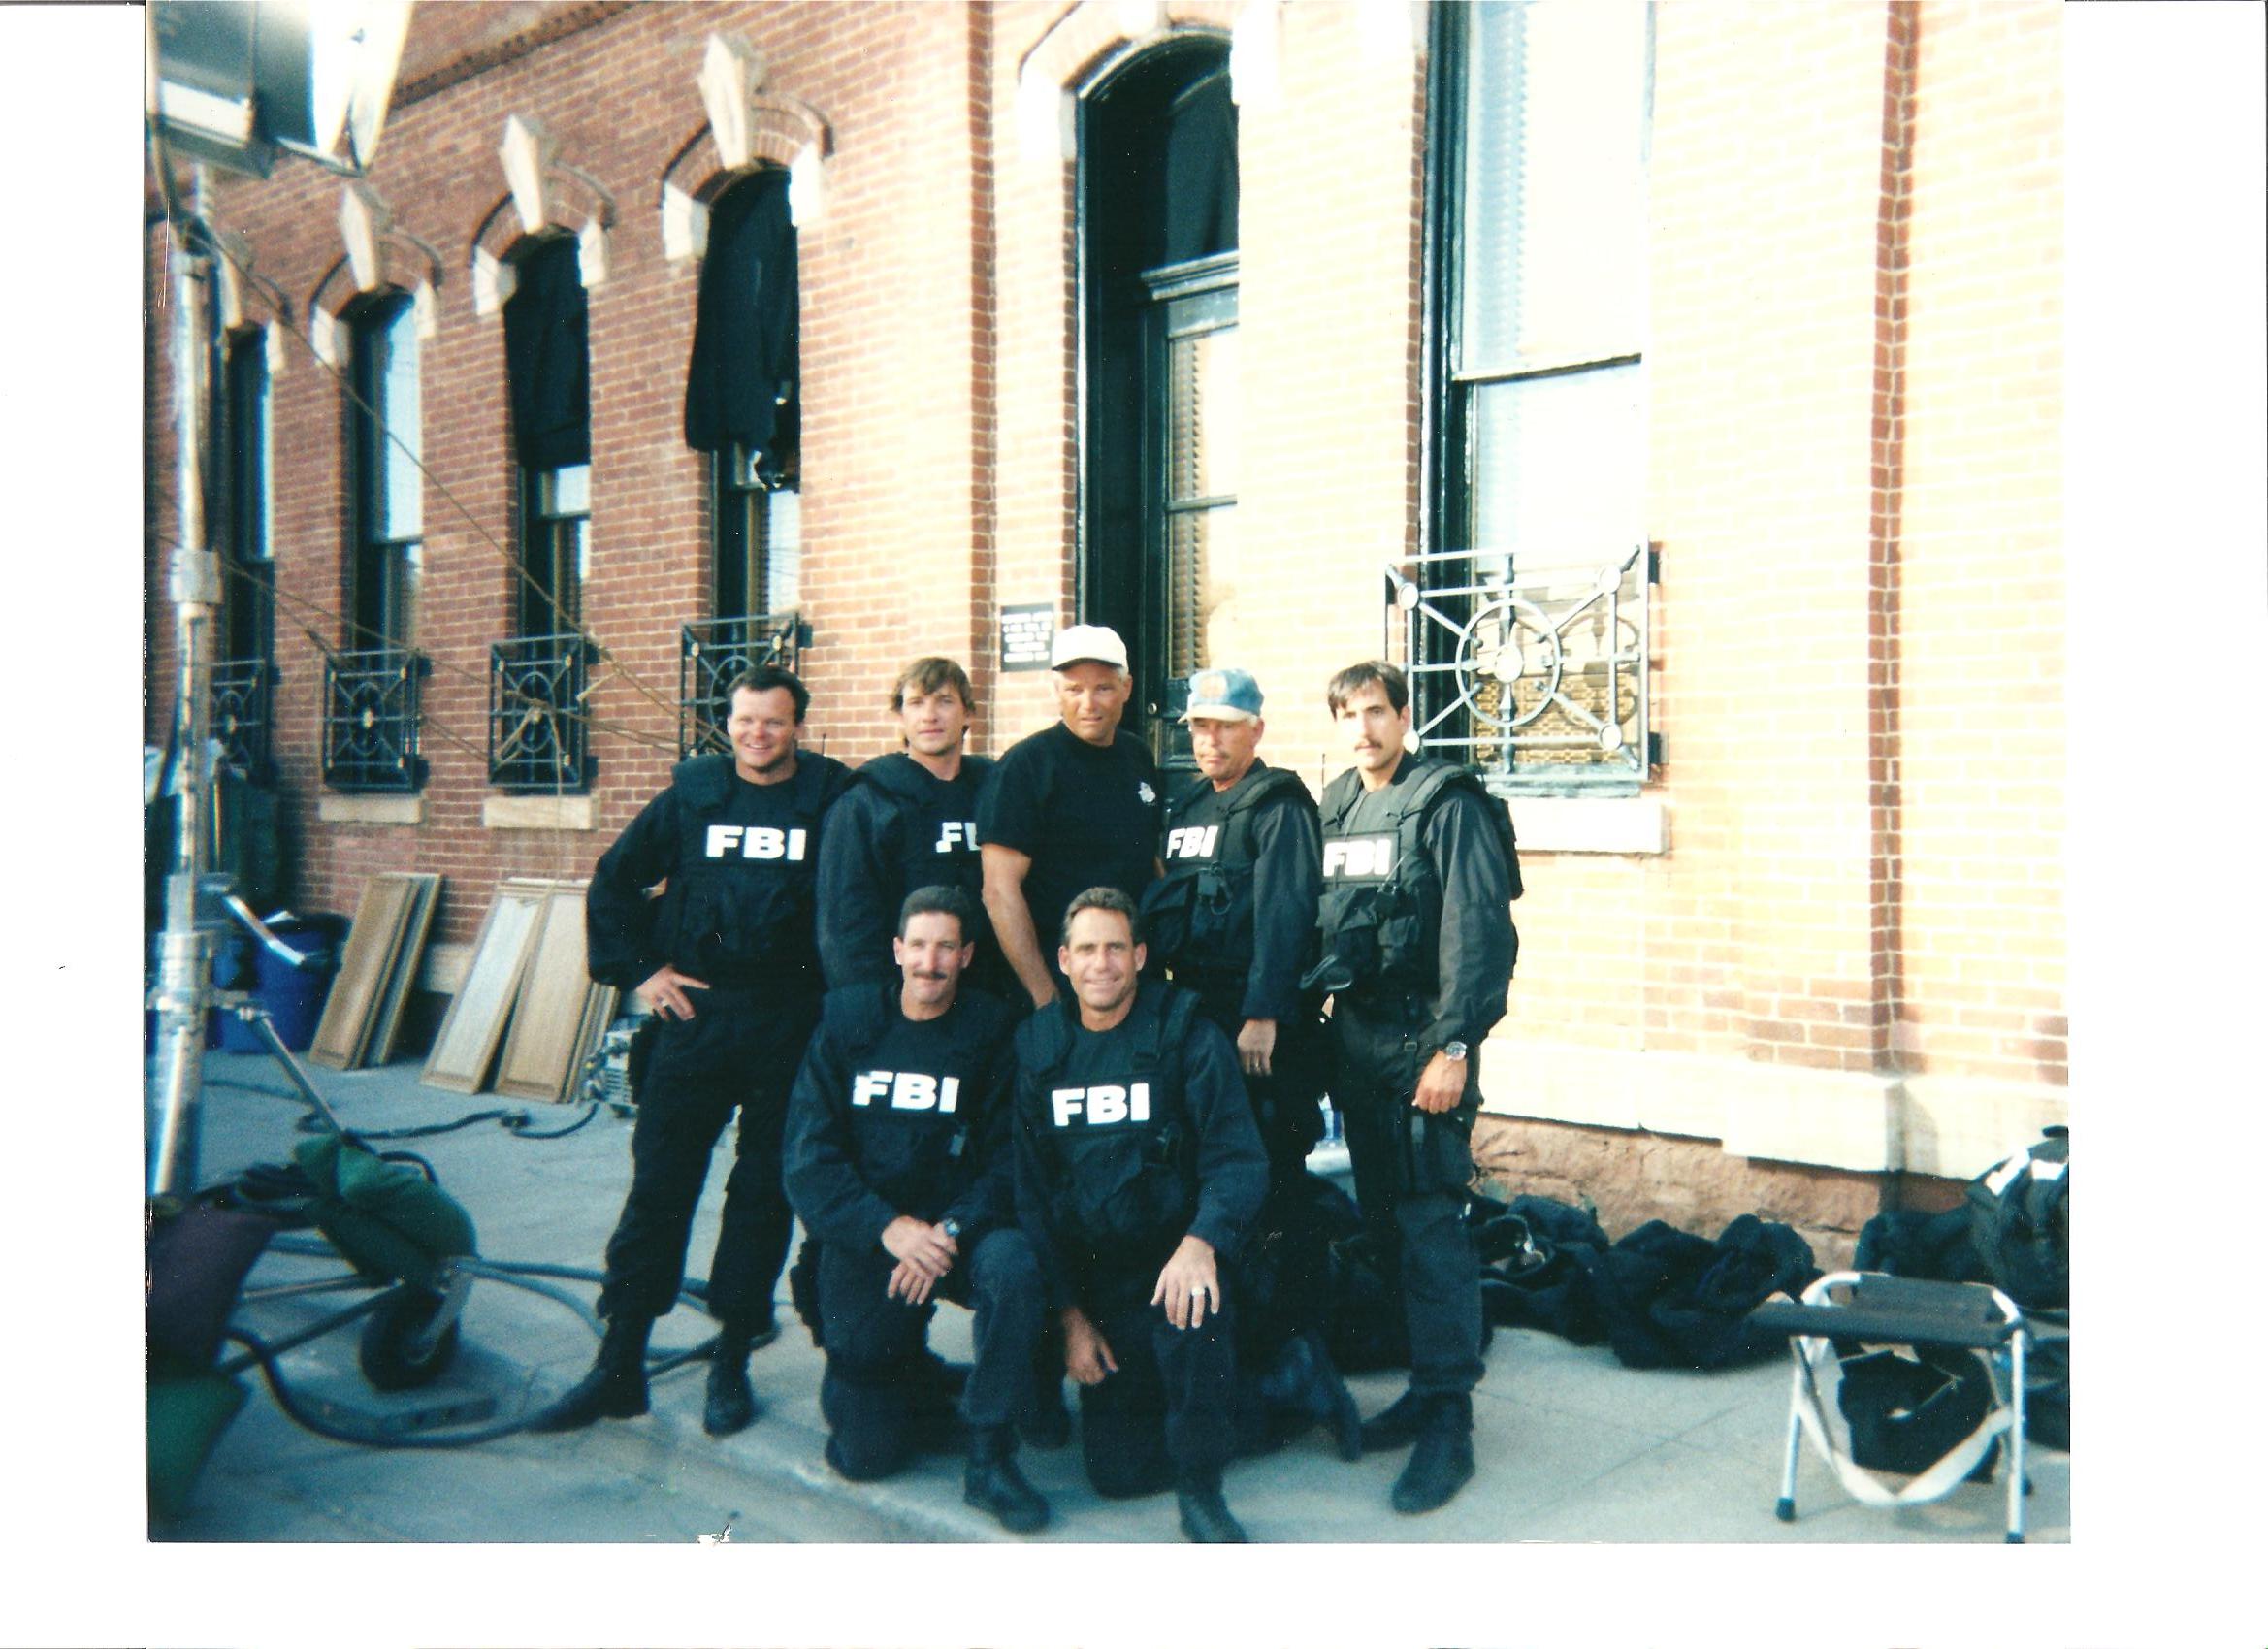 Stunting with members of Los Angeles SWAT team on set of 